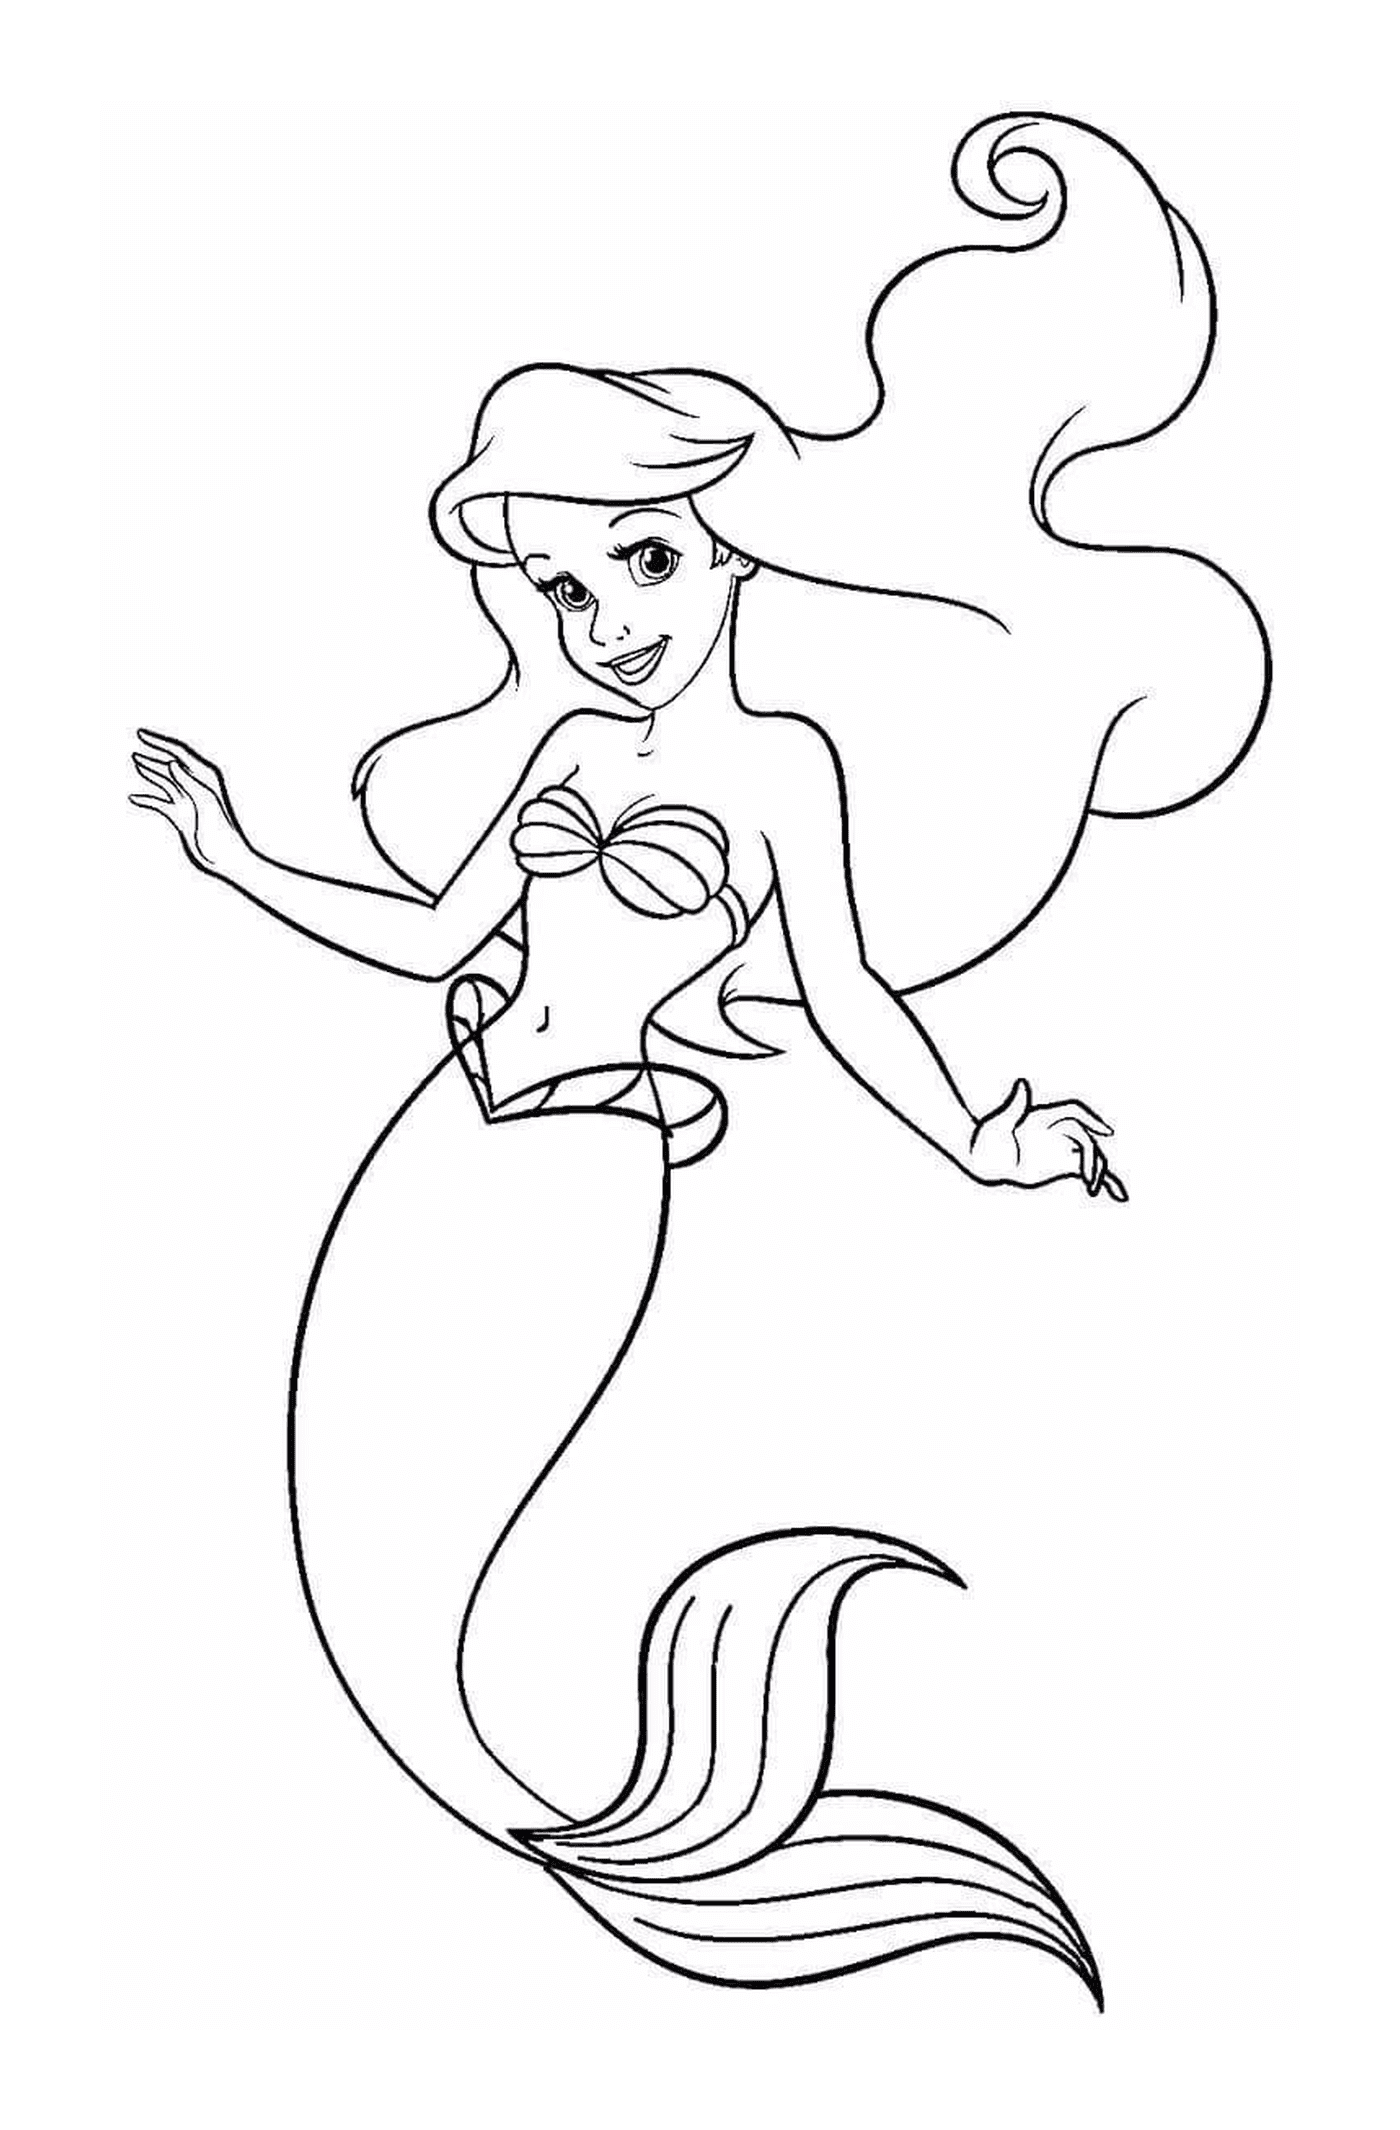   La princesse Ariel de La Petite Sirène 